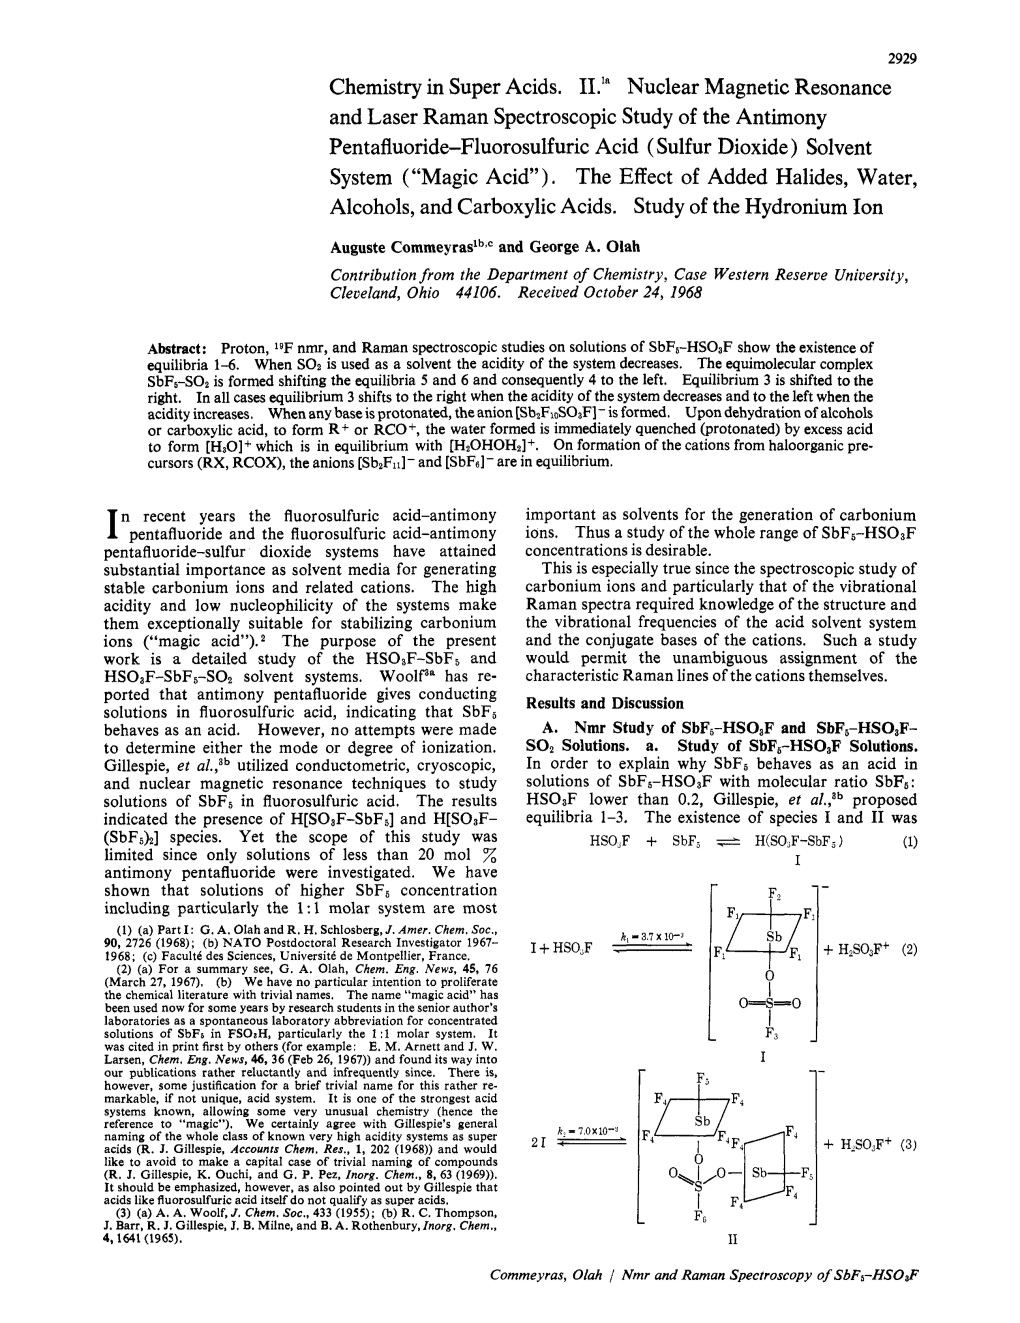 Pentafluoride-Fluorosulfuric Acid (Sulfur Dioxide) Solvent System (“Magic Acid”)